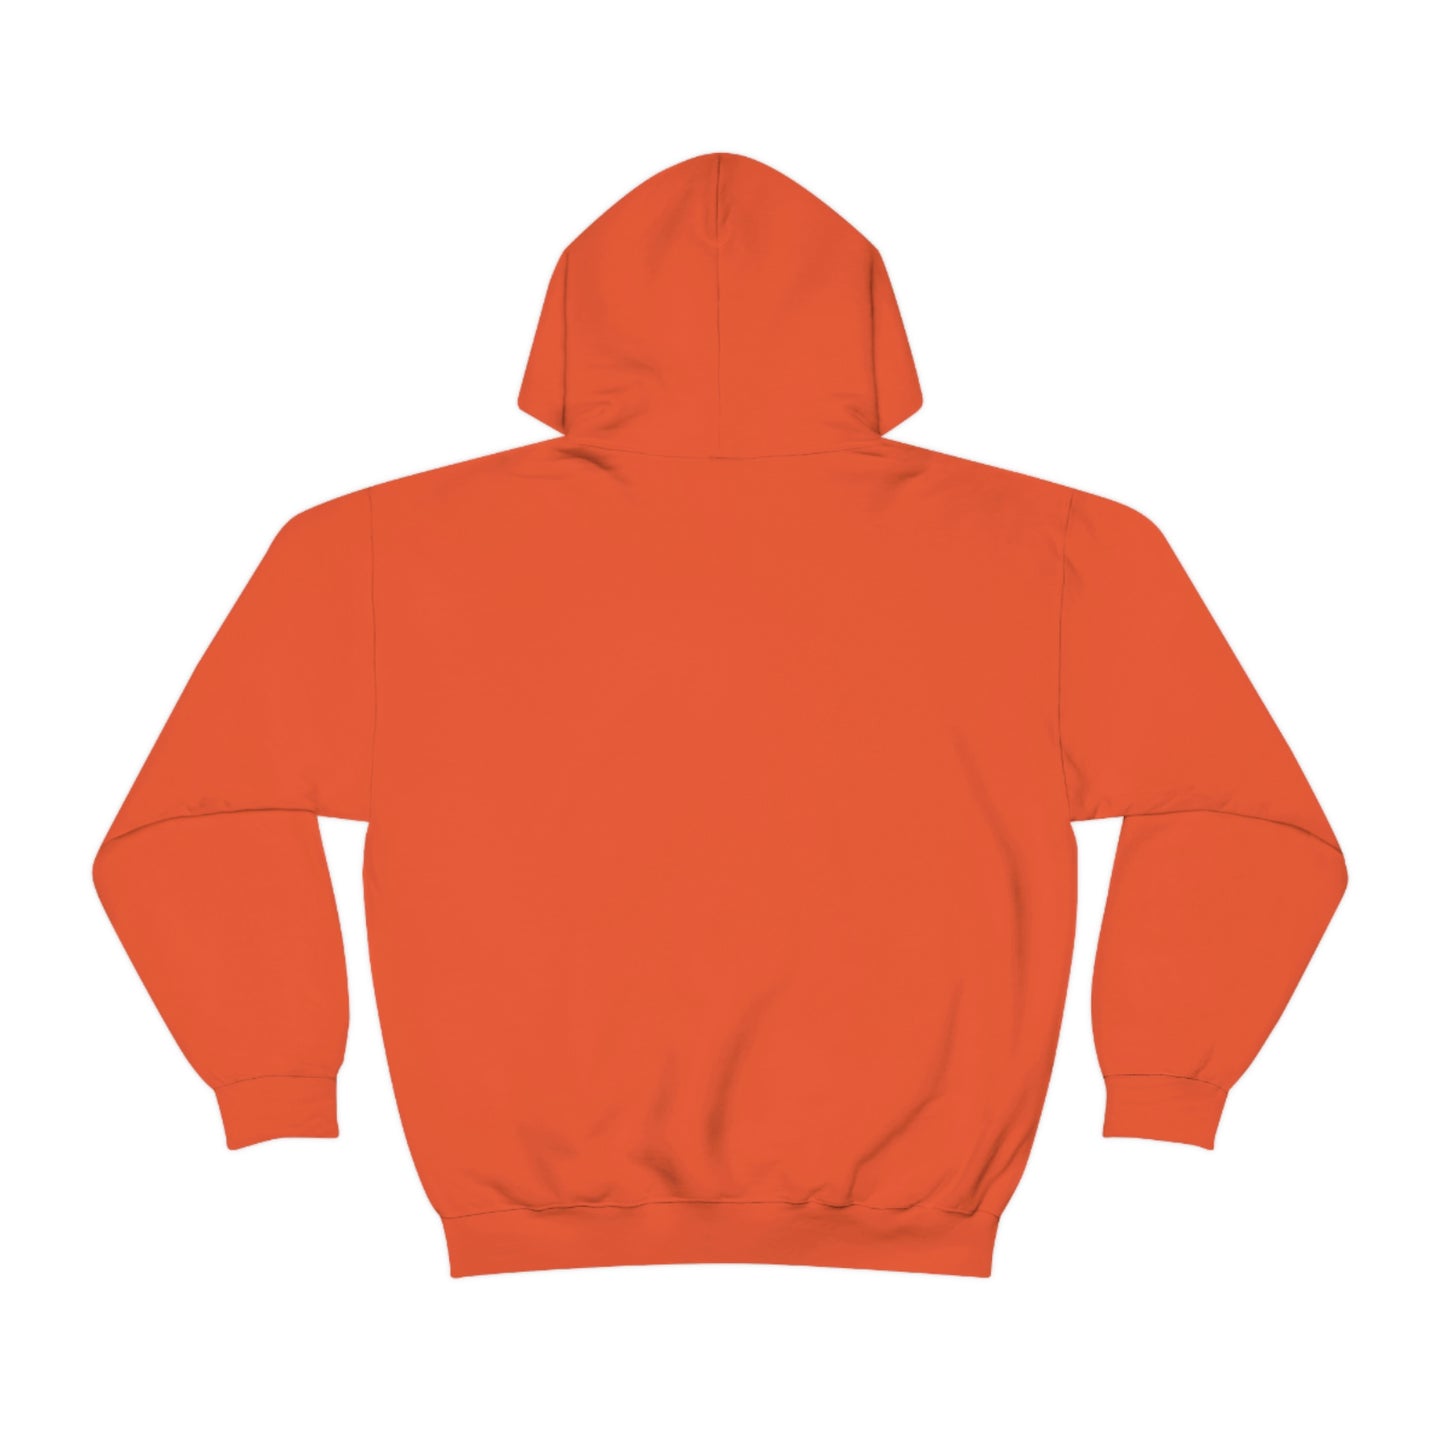 TRiNiTY Pappy Legba - Unisex Heavy Blend™ Hooded Sweatshirt